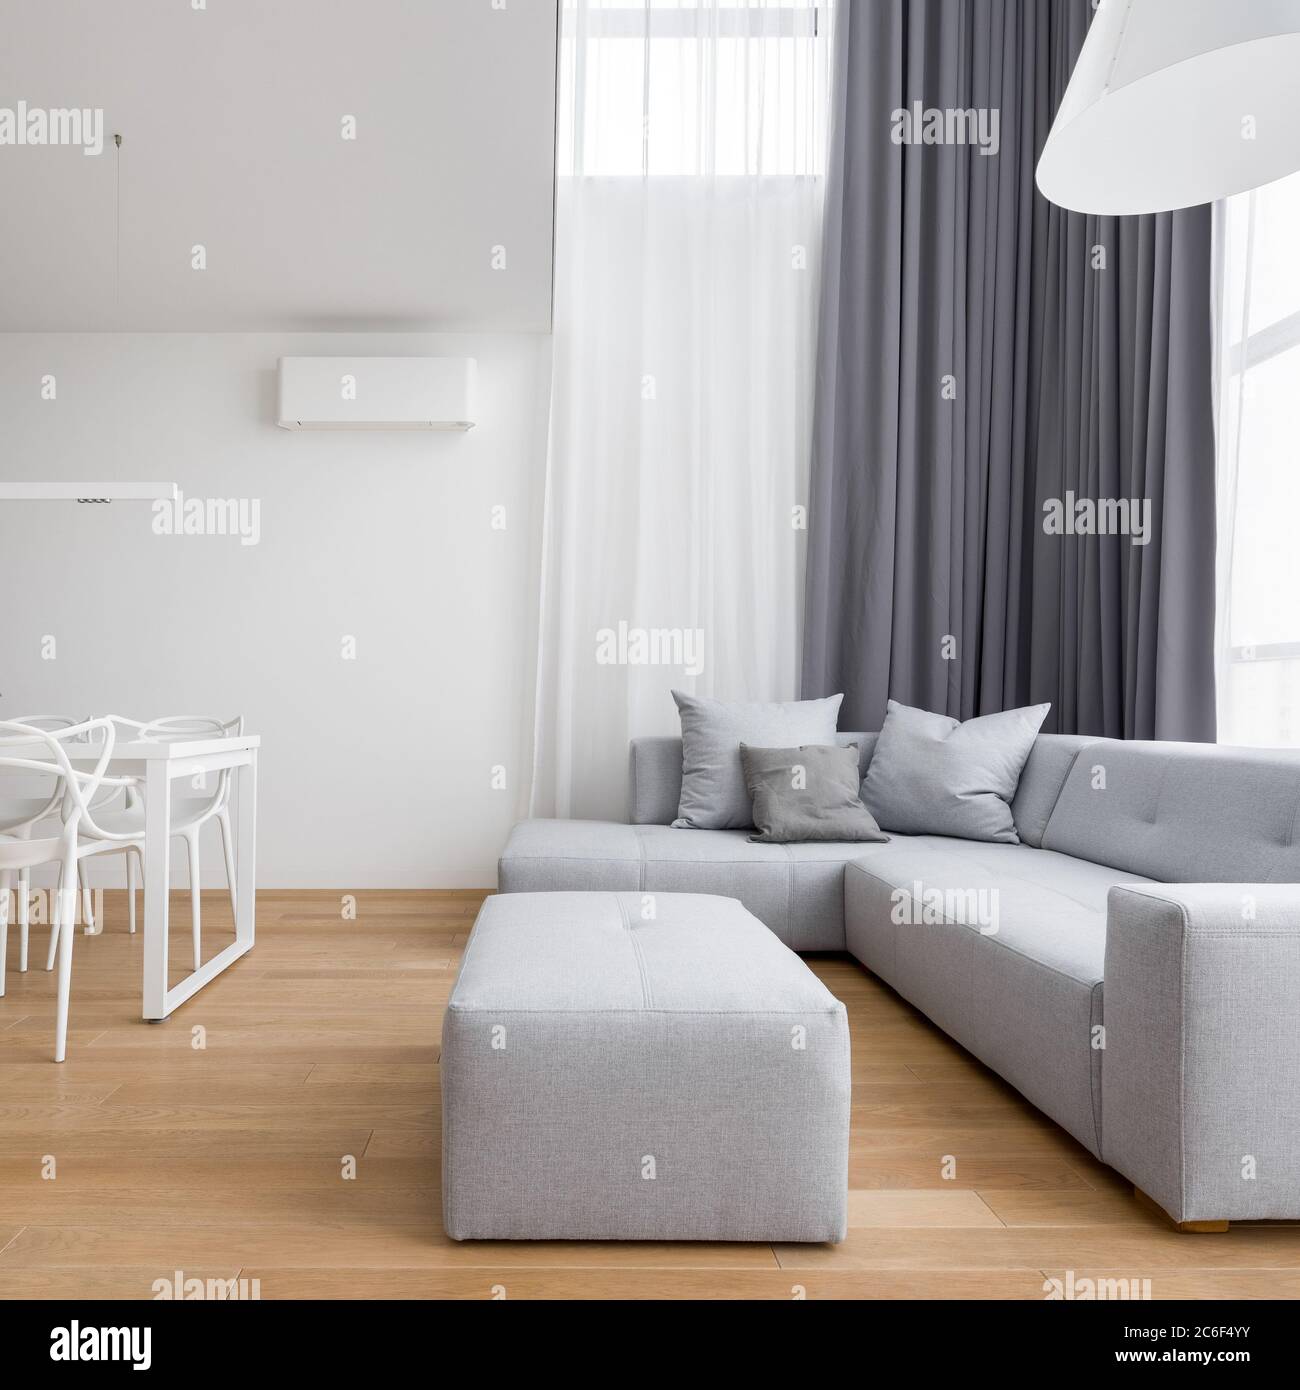 Minimalist design living room with gray corner sofa and long window curtains Stock Photo